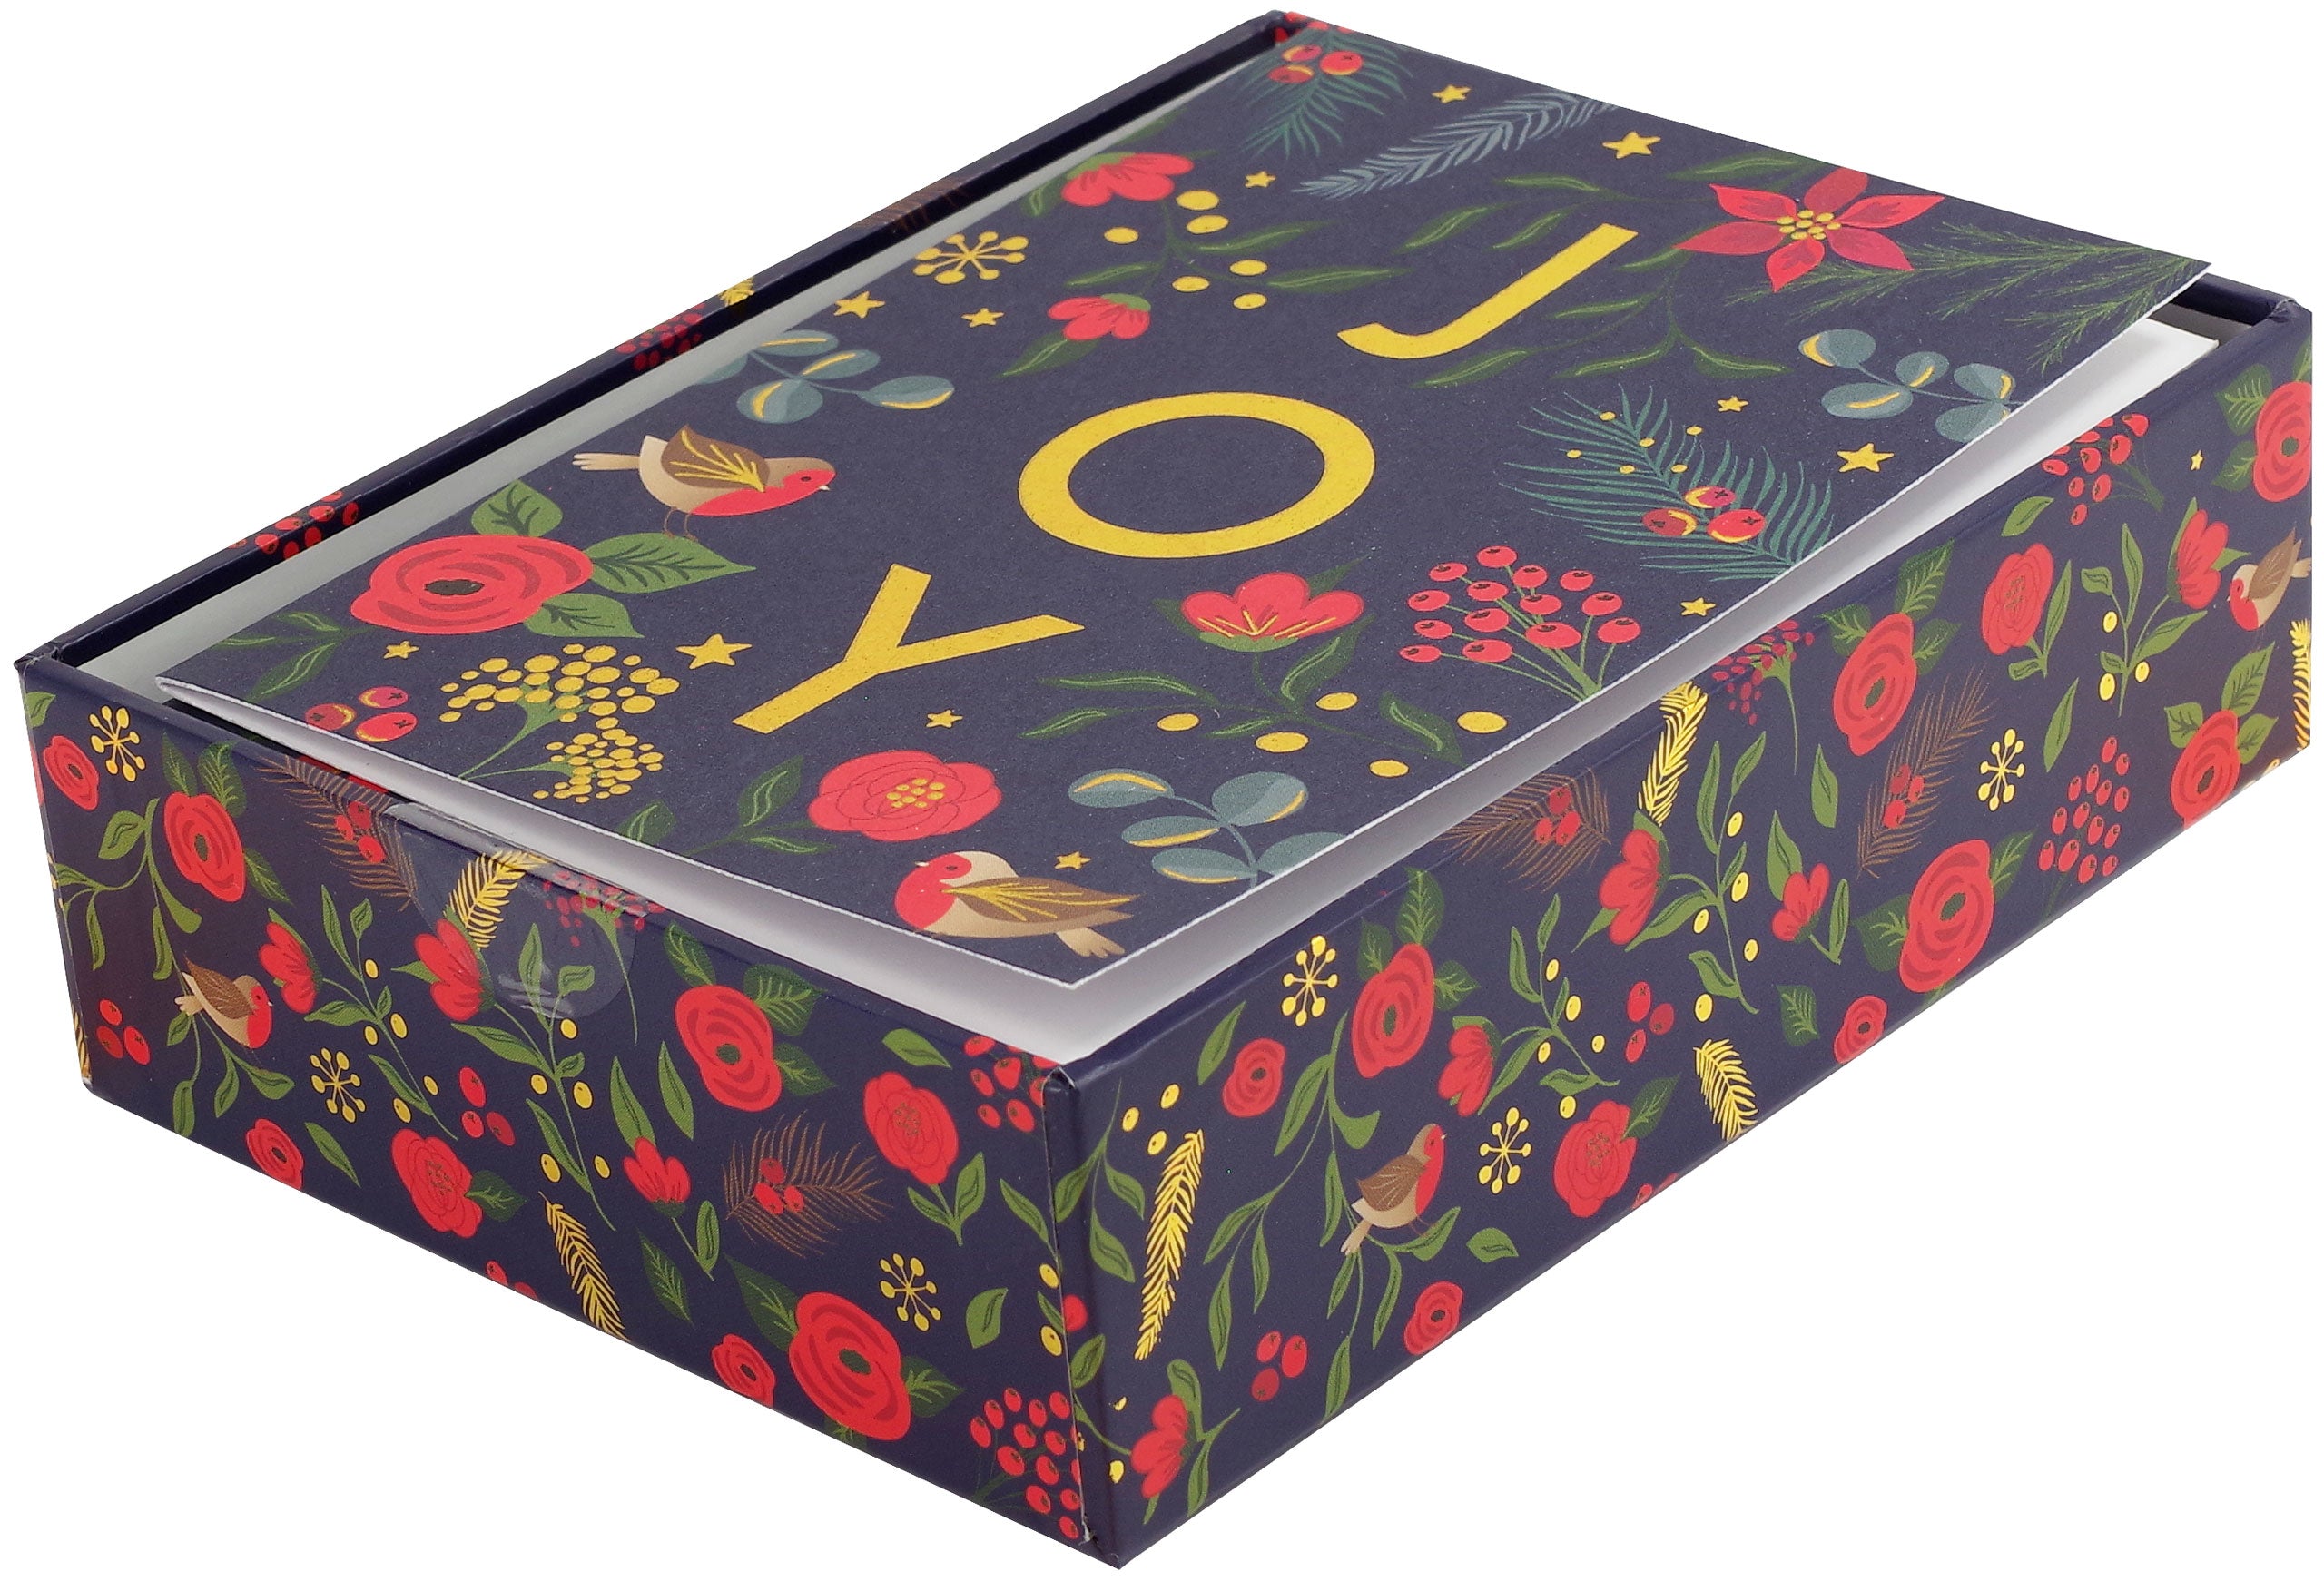 Boxed Christmas Cards - Joy    